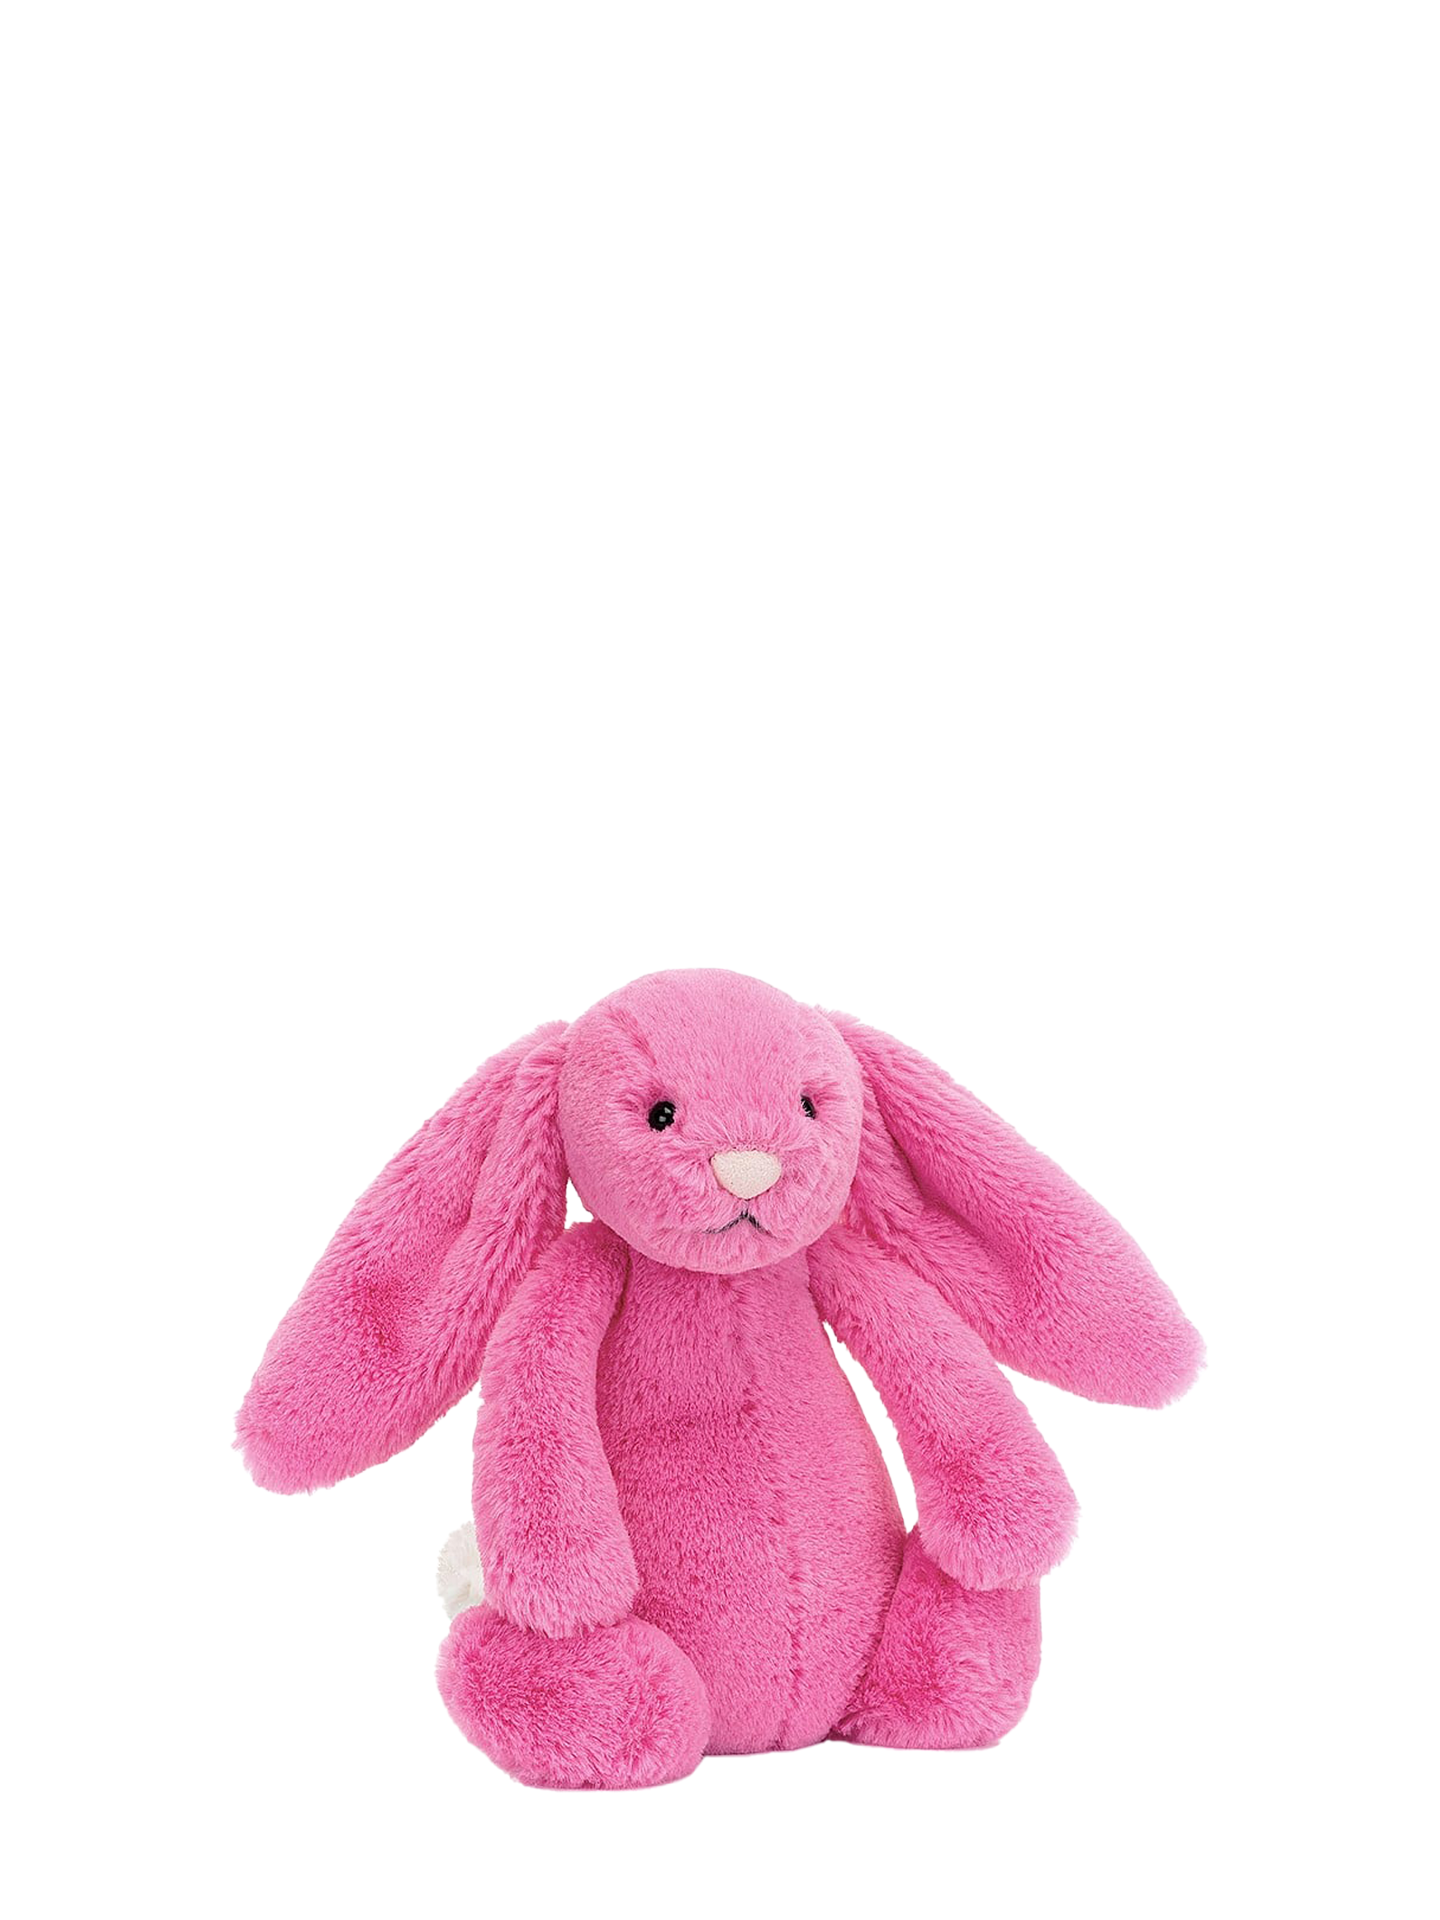 Bashful hot pink bunny, small